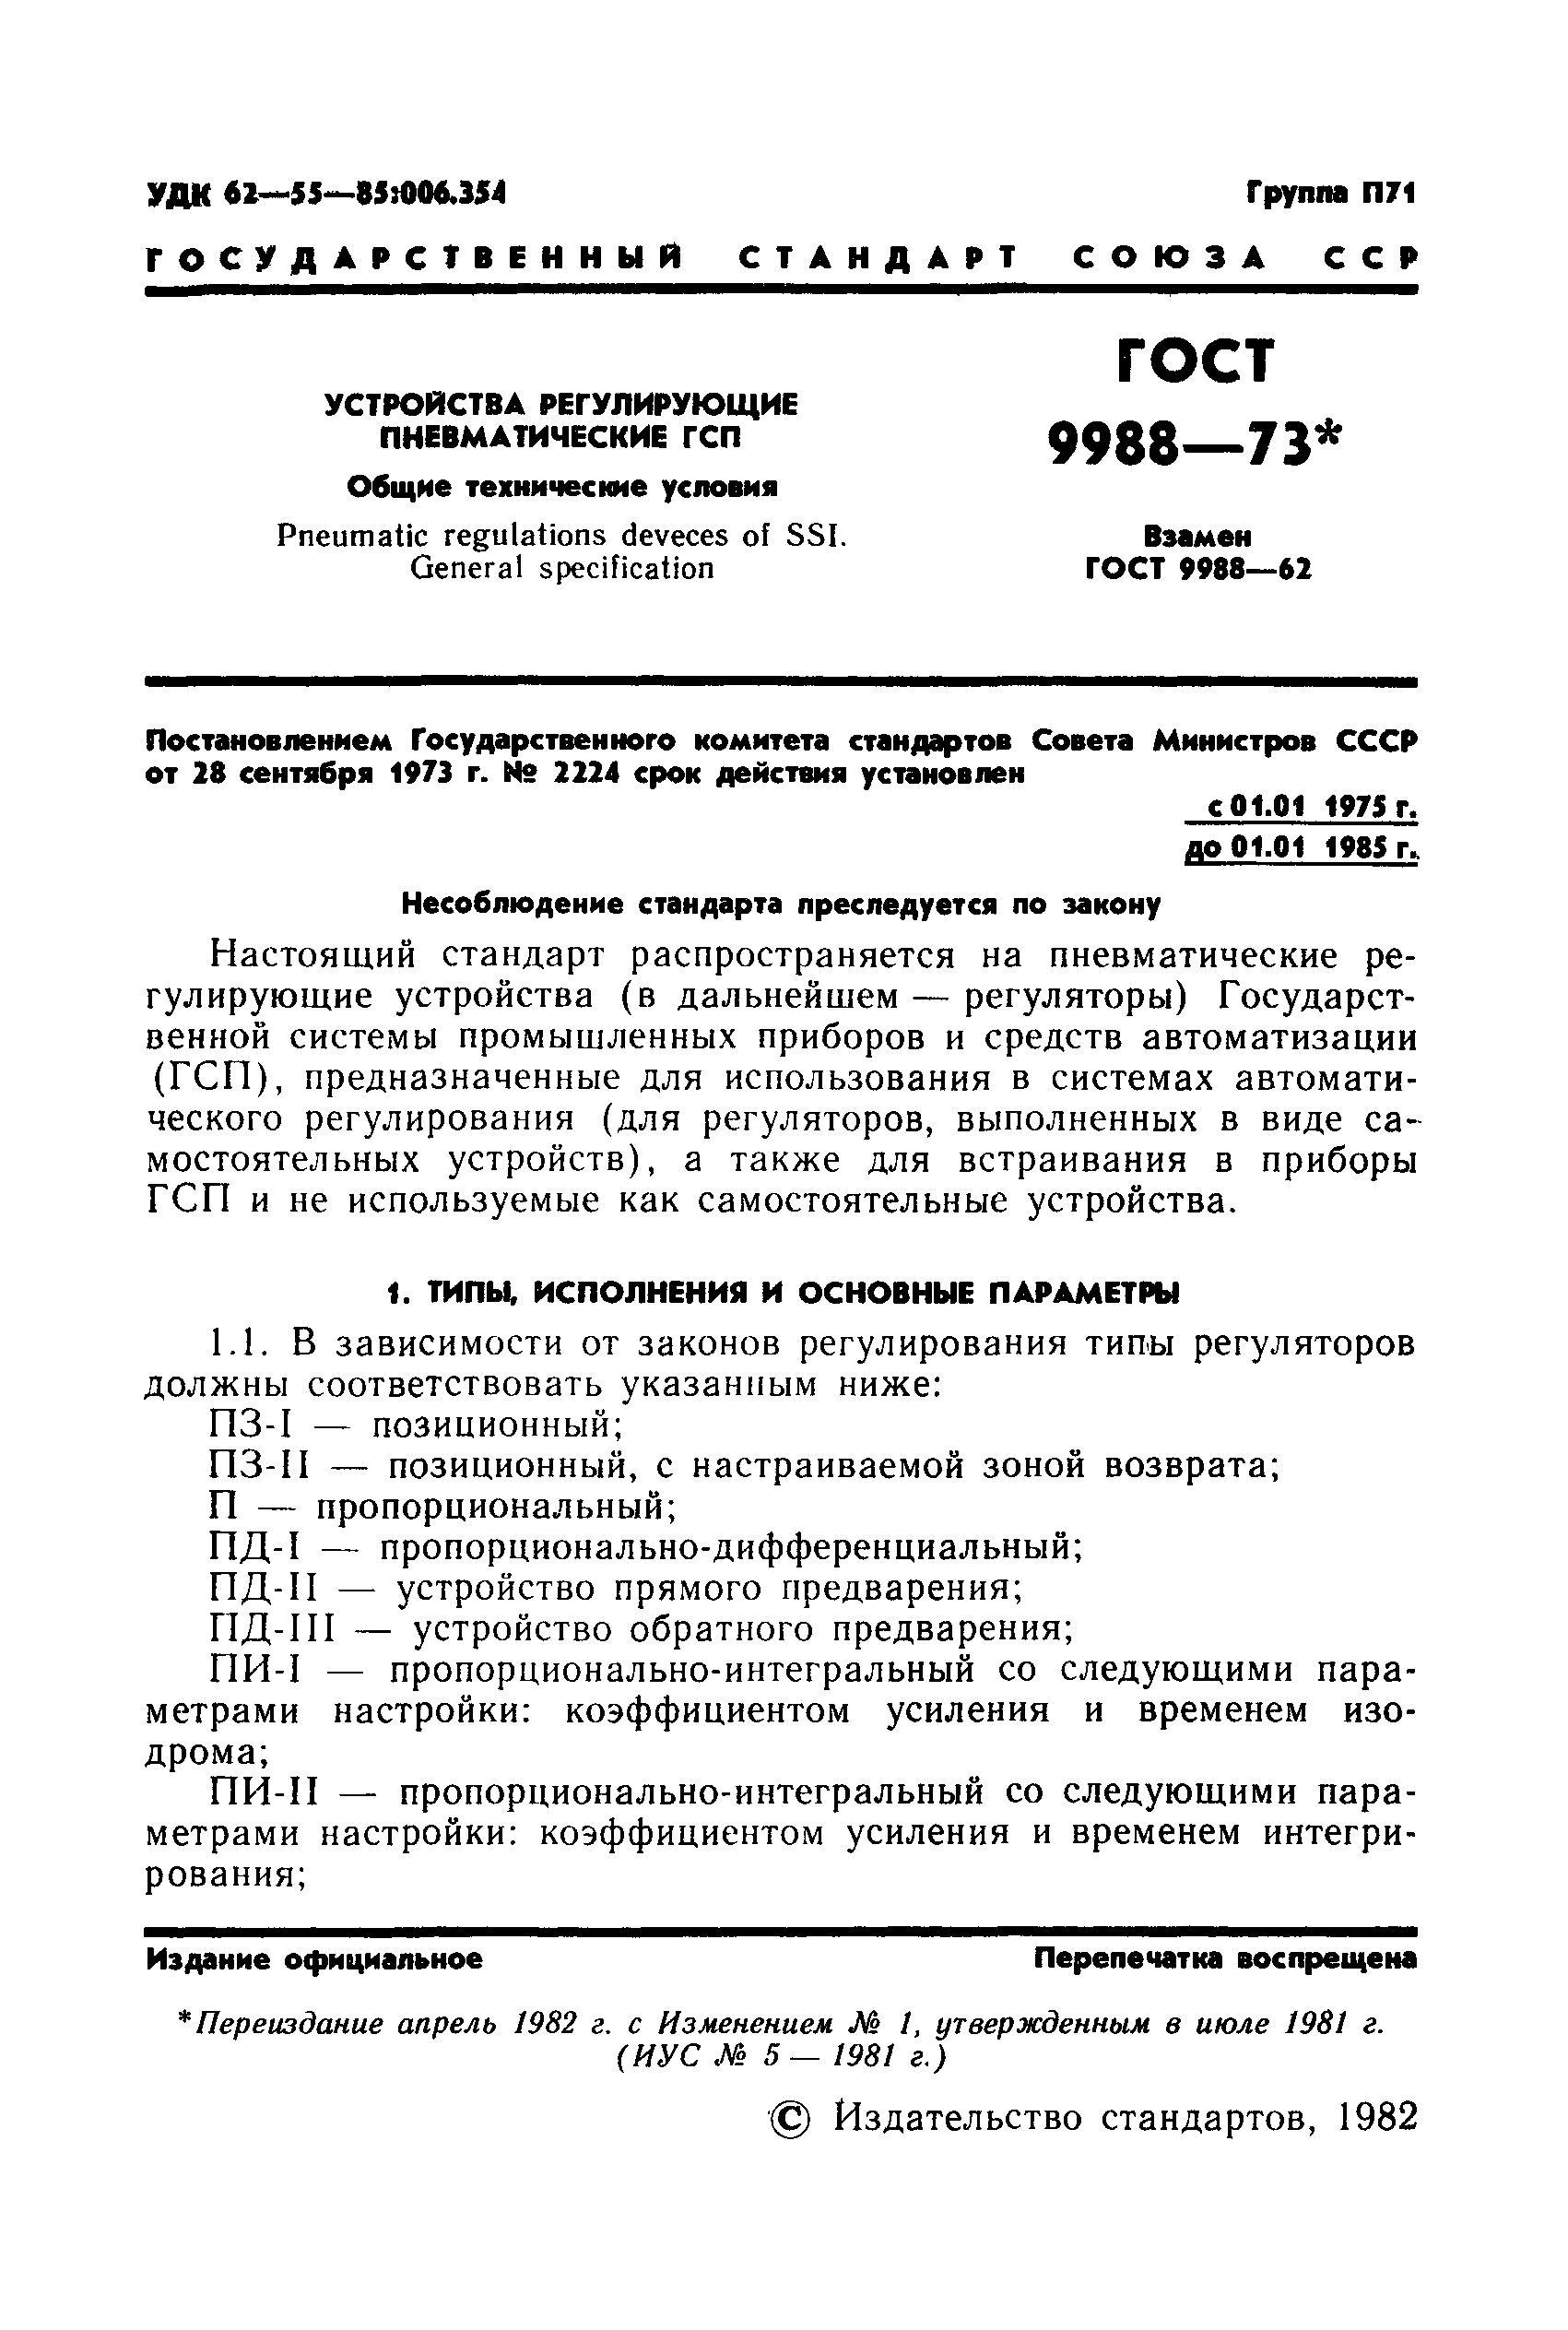 ГОСТ 9988-73